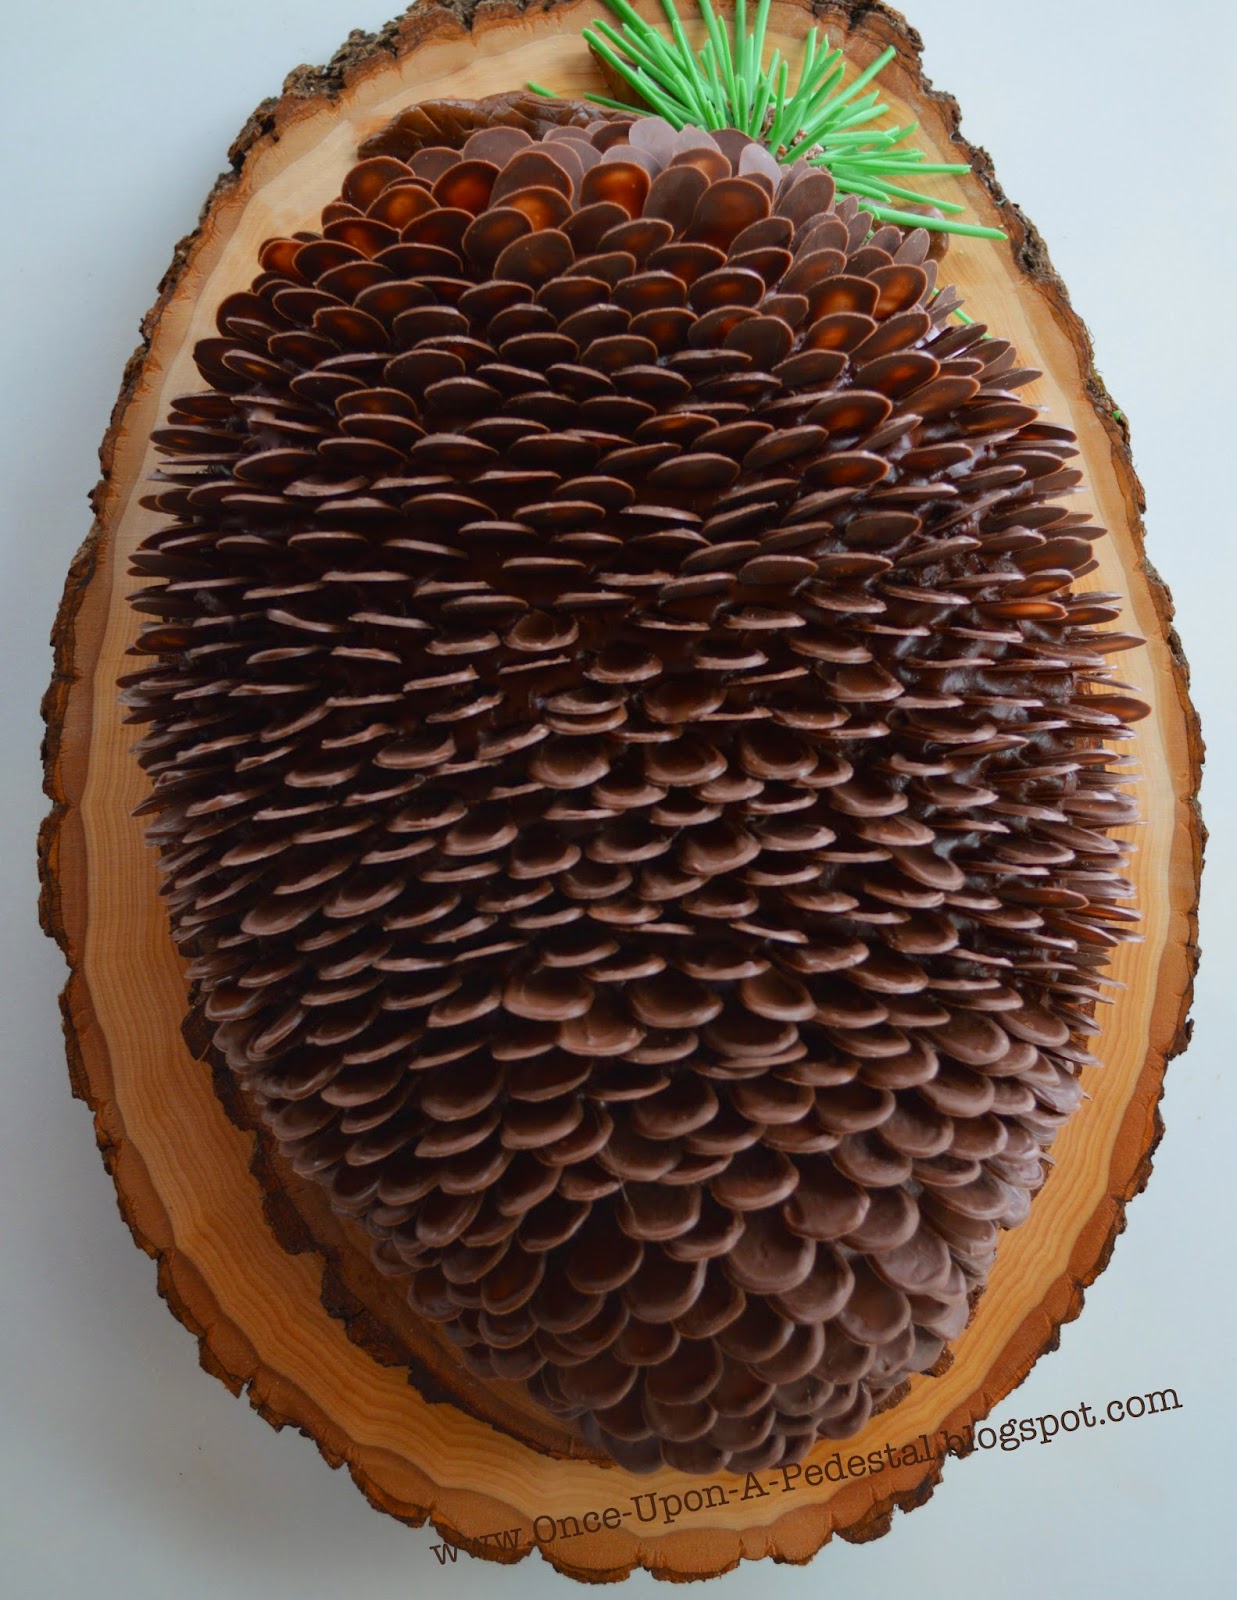 pine-cone-cake-rose-levy-beranbaum-the-cake-bible-christmas-tutorial-deborah-stauch